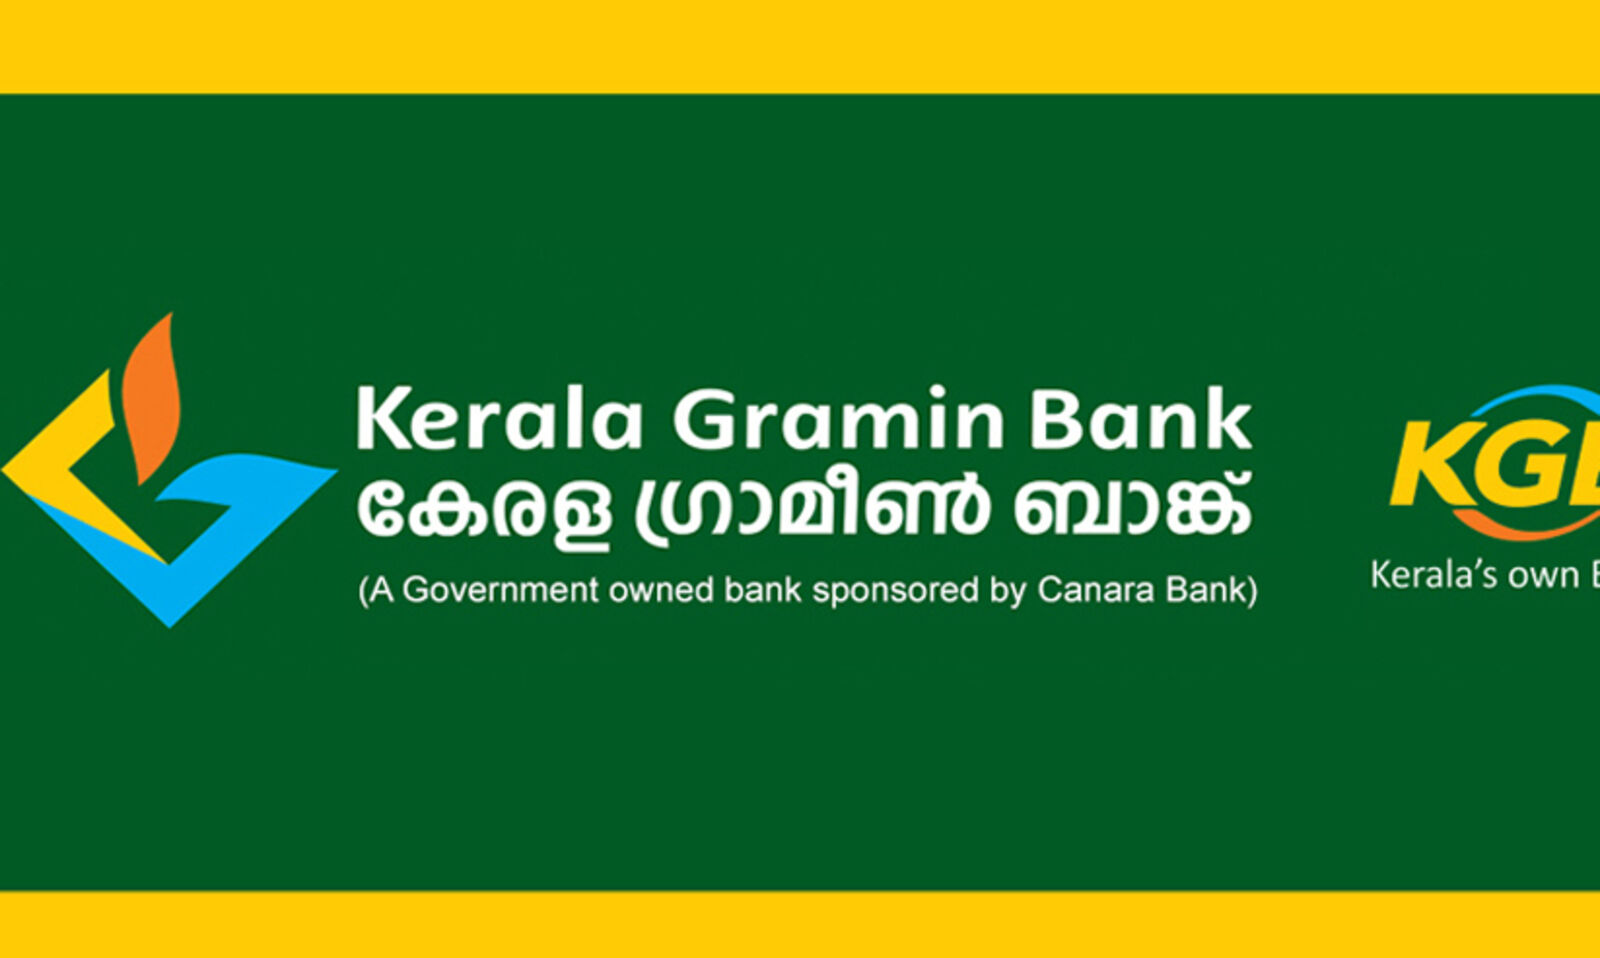 Gramin Bank; Easily get personal loan from Gramin Bank